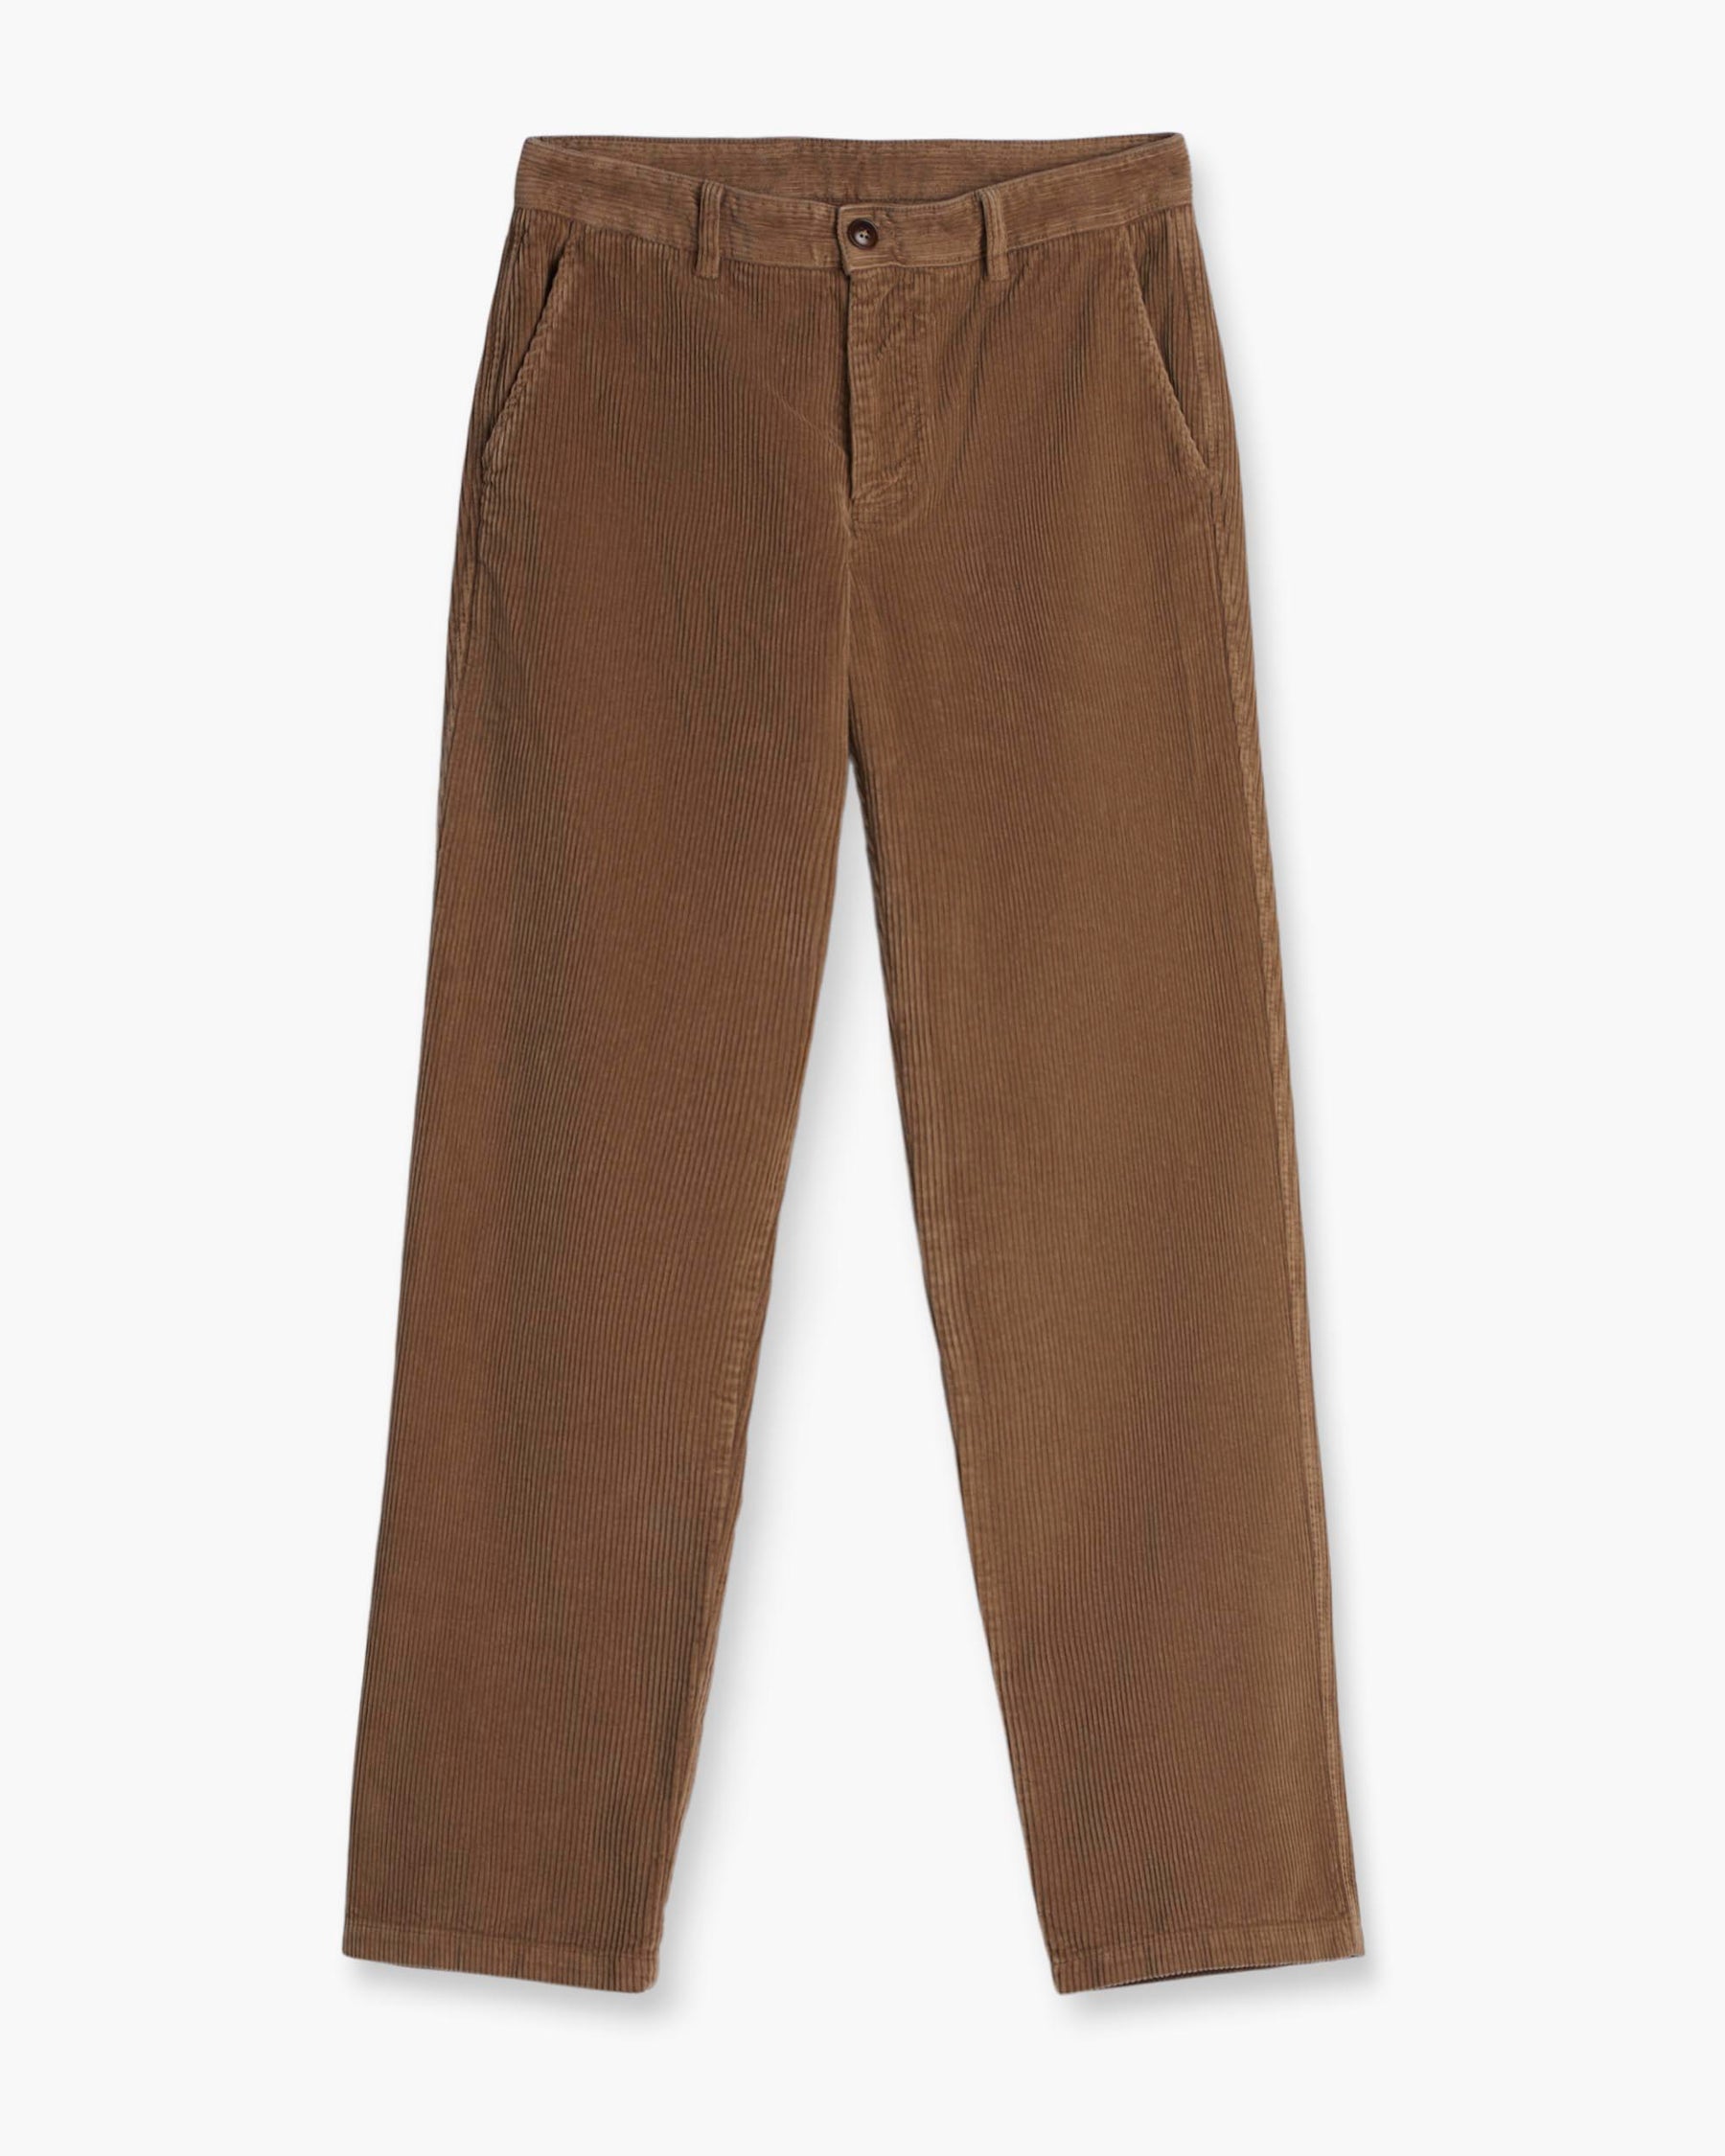 Homecore  LYNCH CORD trousers / men